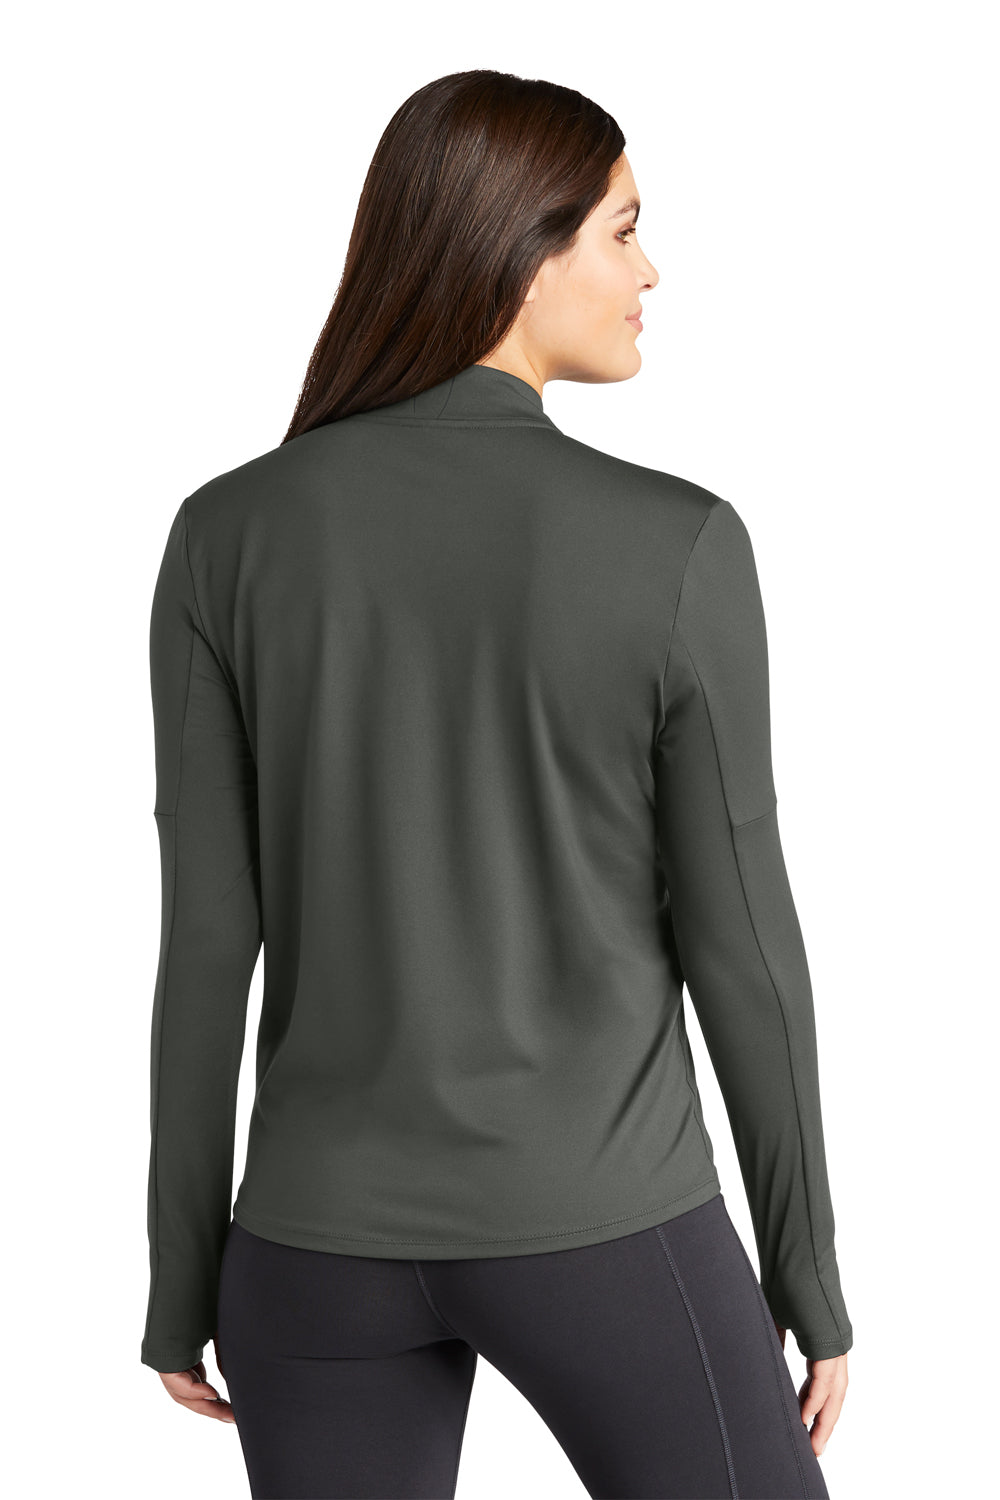 Nike NKDH4951 Womens Element Dri-Fit Moisture Wicking 1/4 Zip Sweatshirt Anthracite Grey Model Back